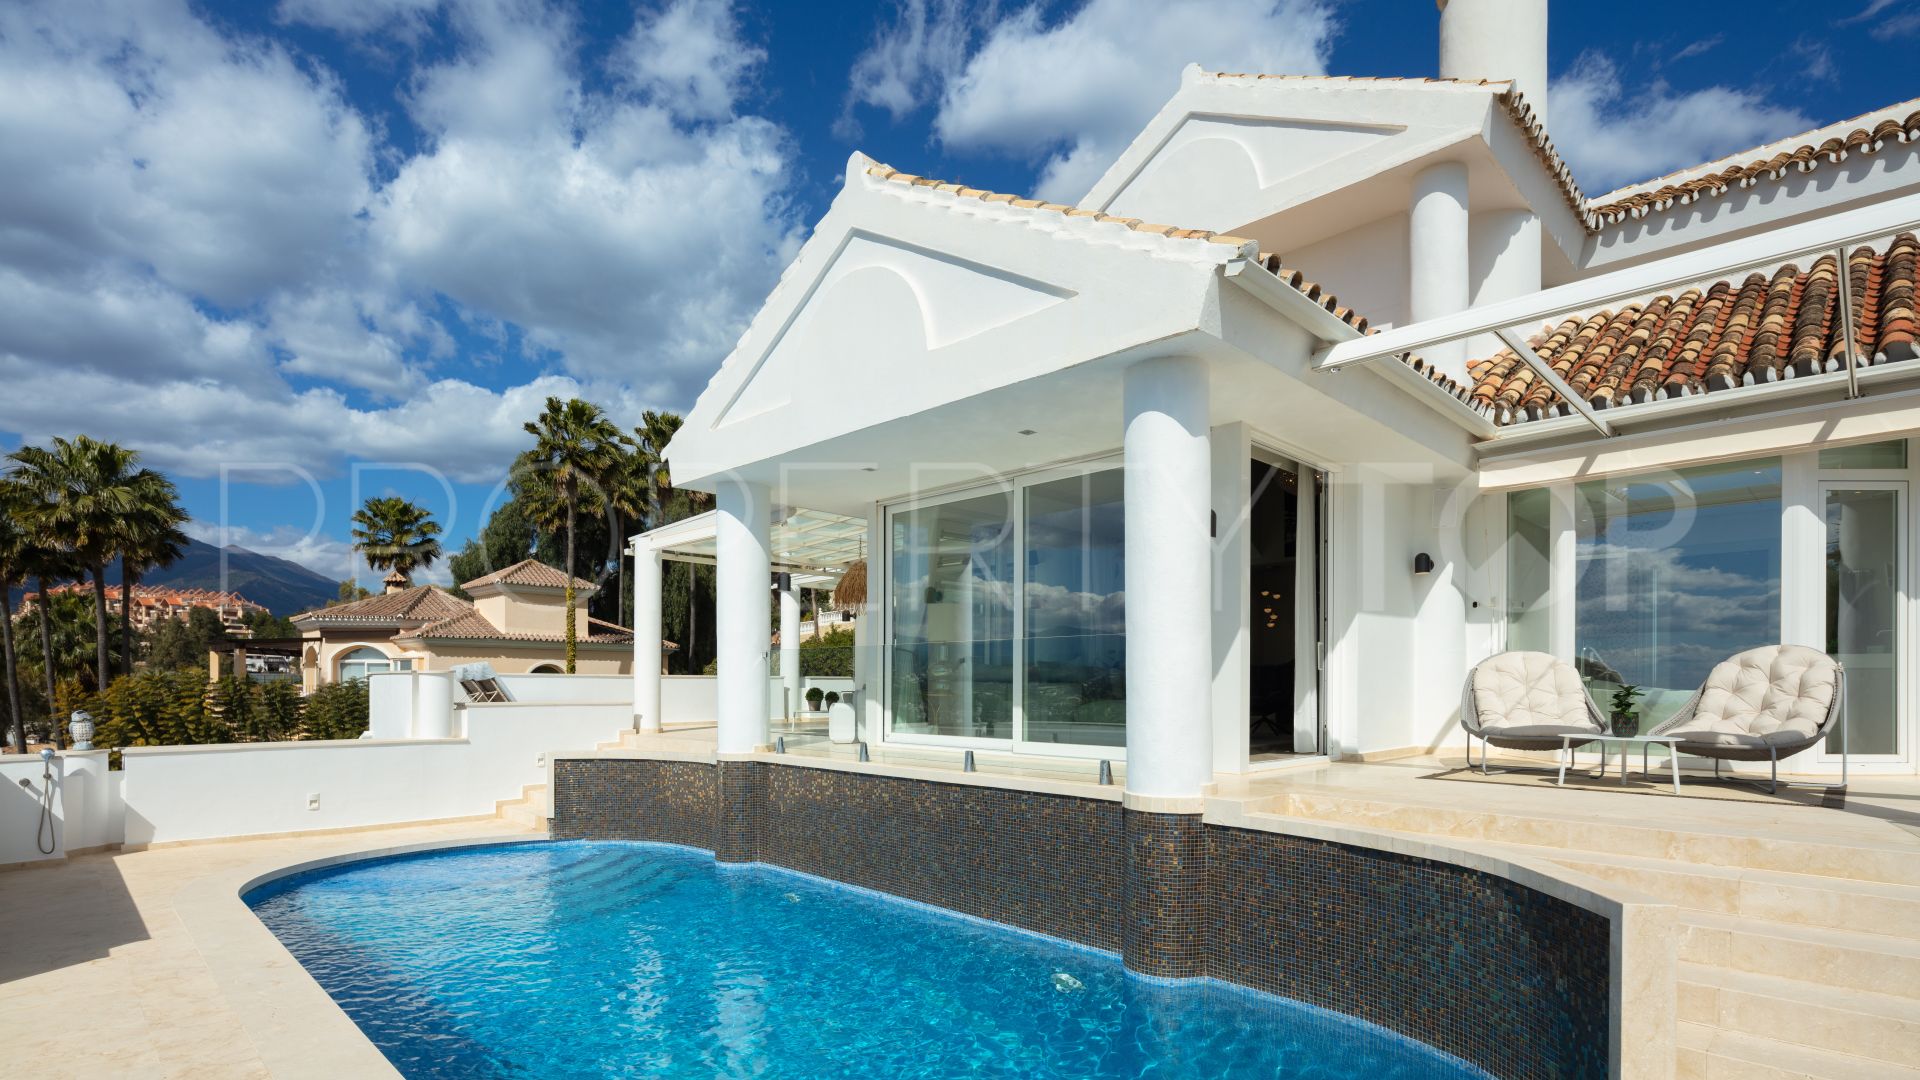 3 bedrooms villa in Nueva Andalucia for sale